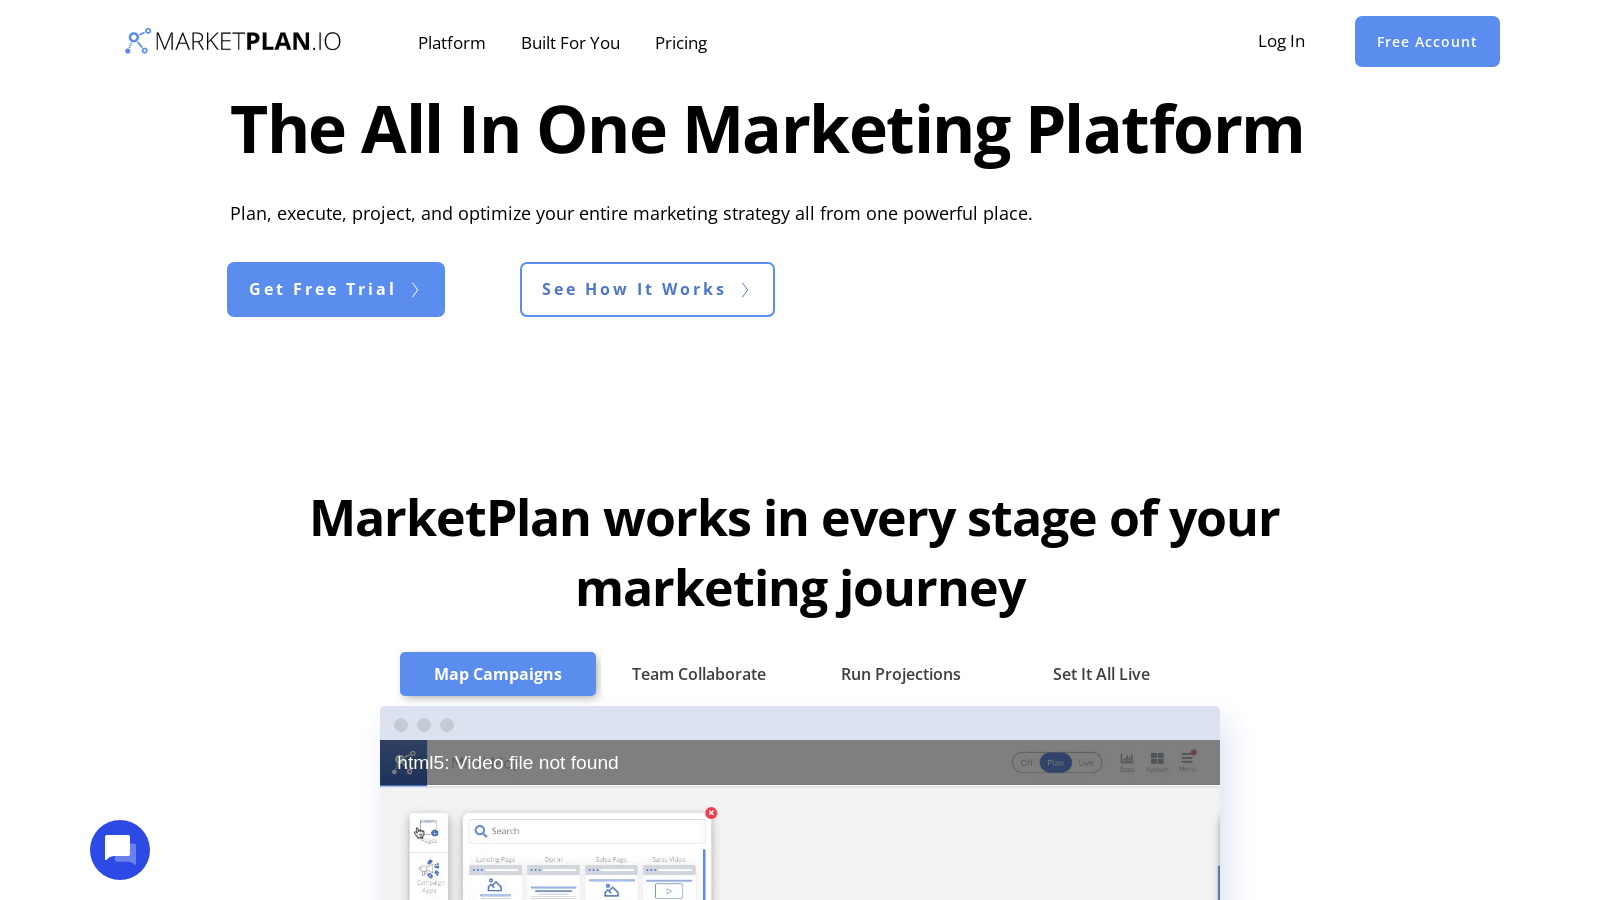 marketplan.io